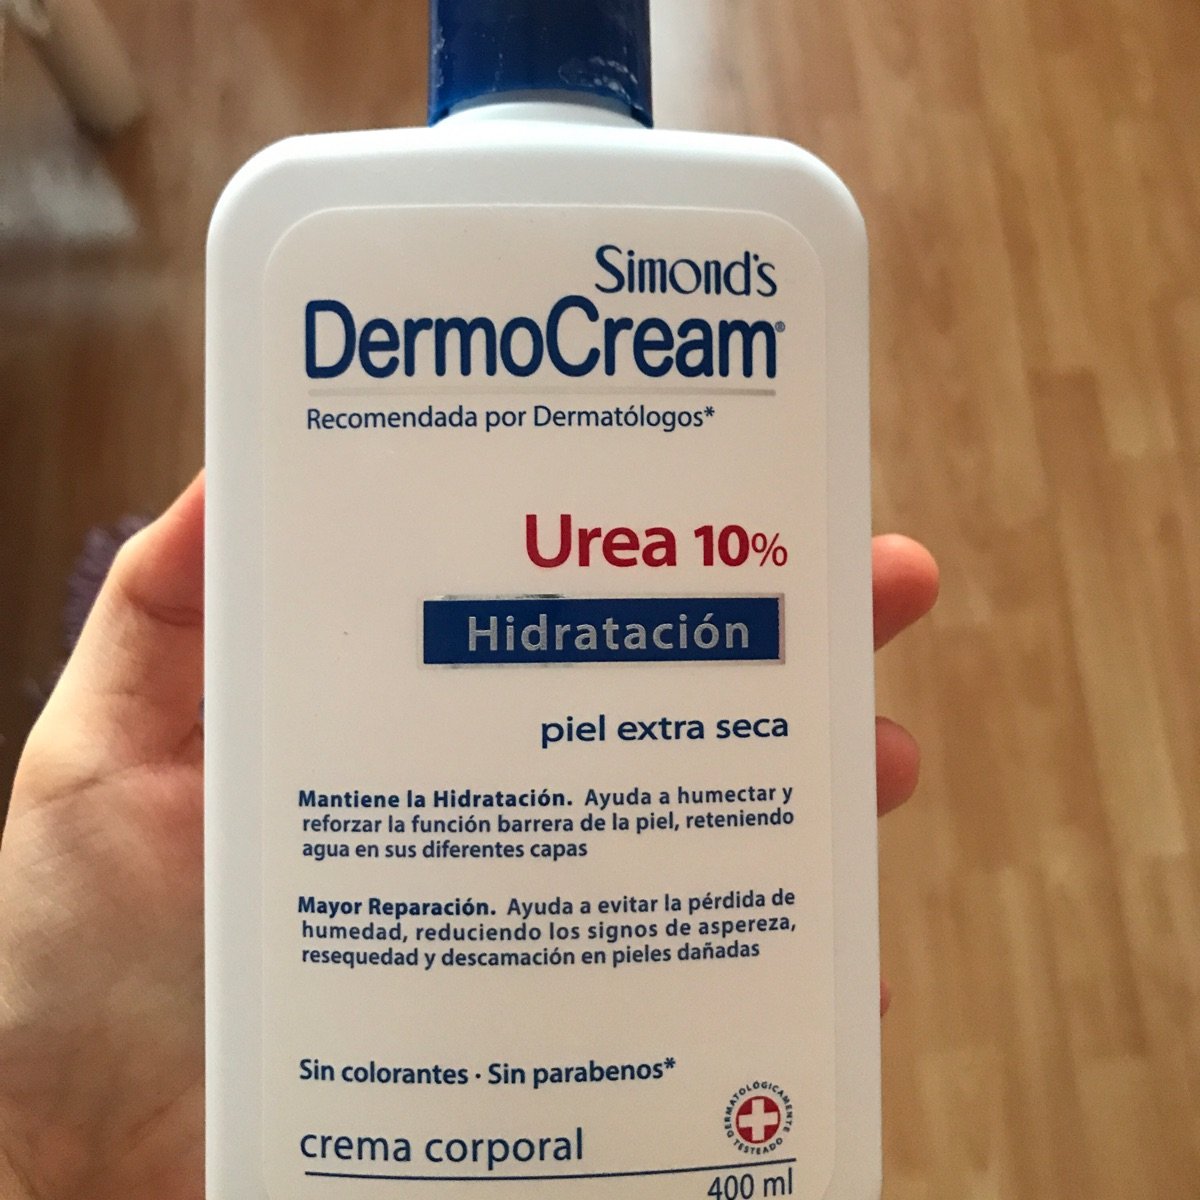 Simond's DermoCream Urea 10% Review | abillion